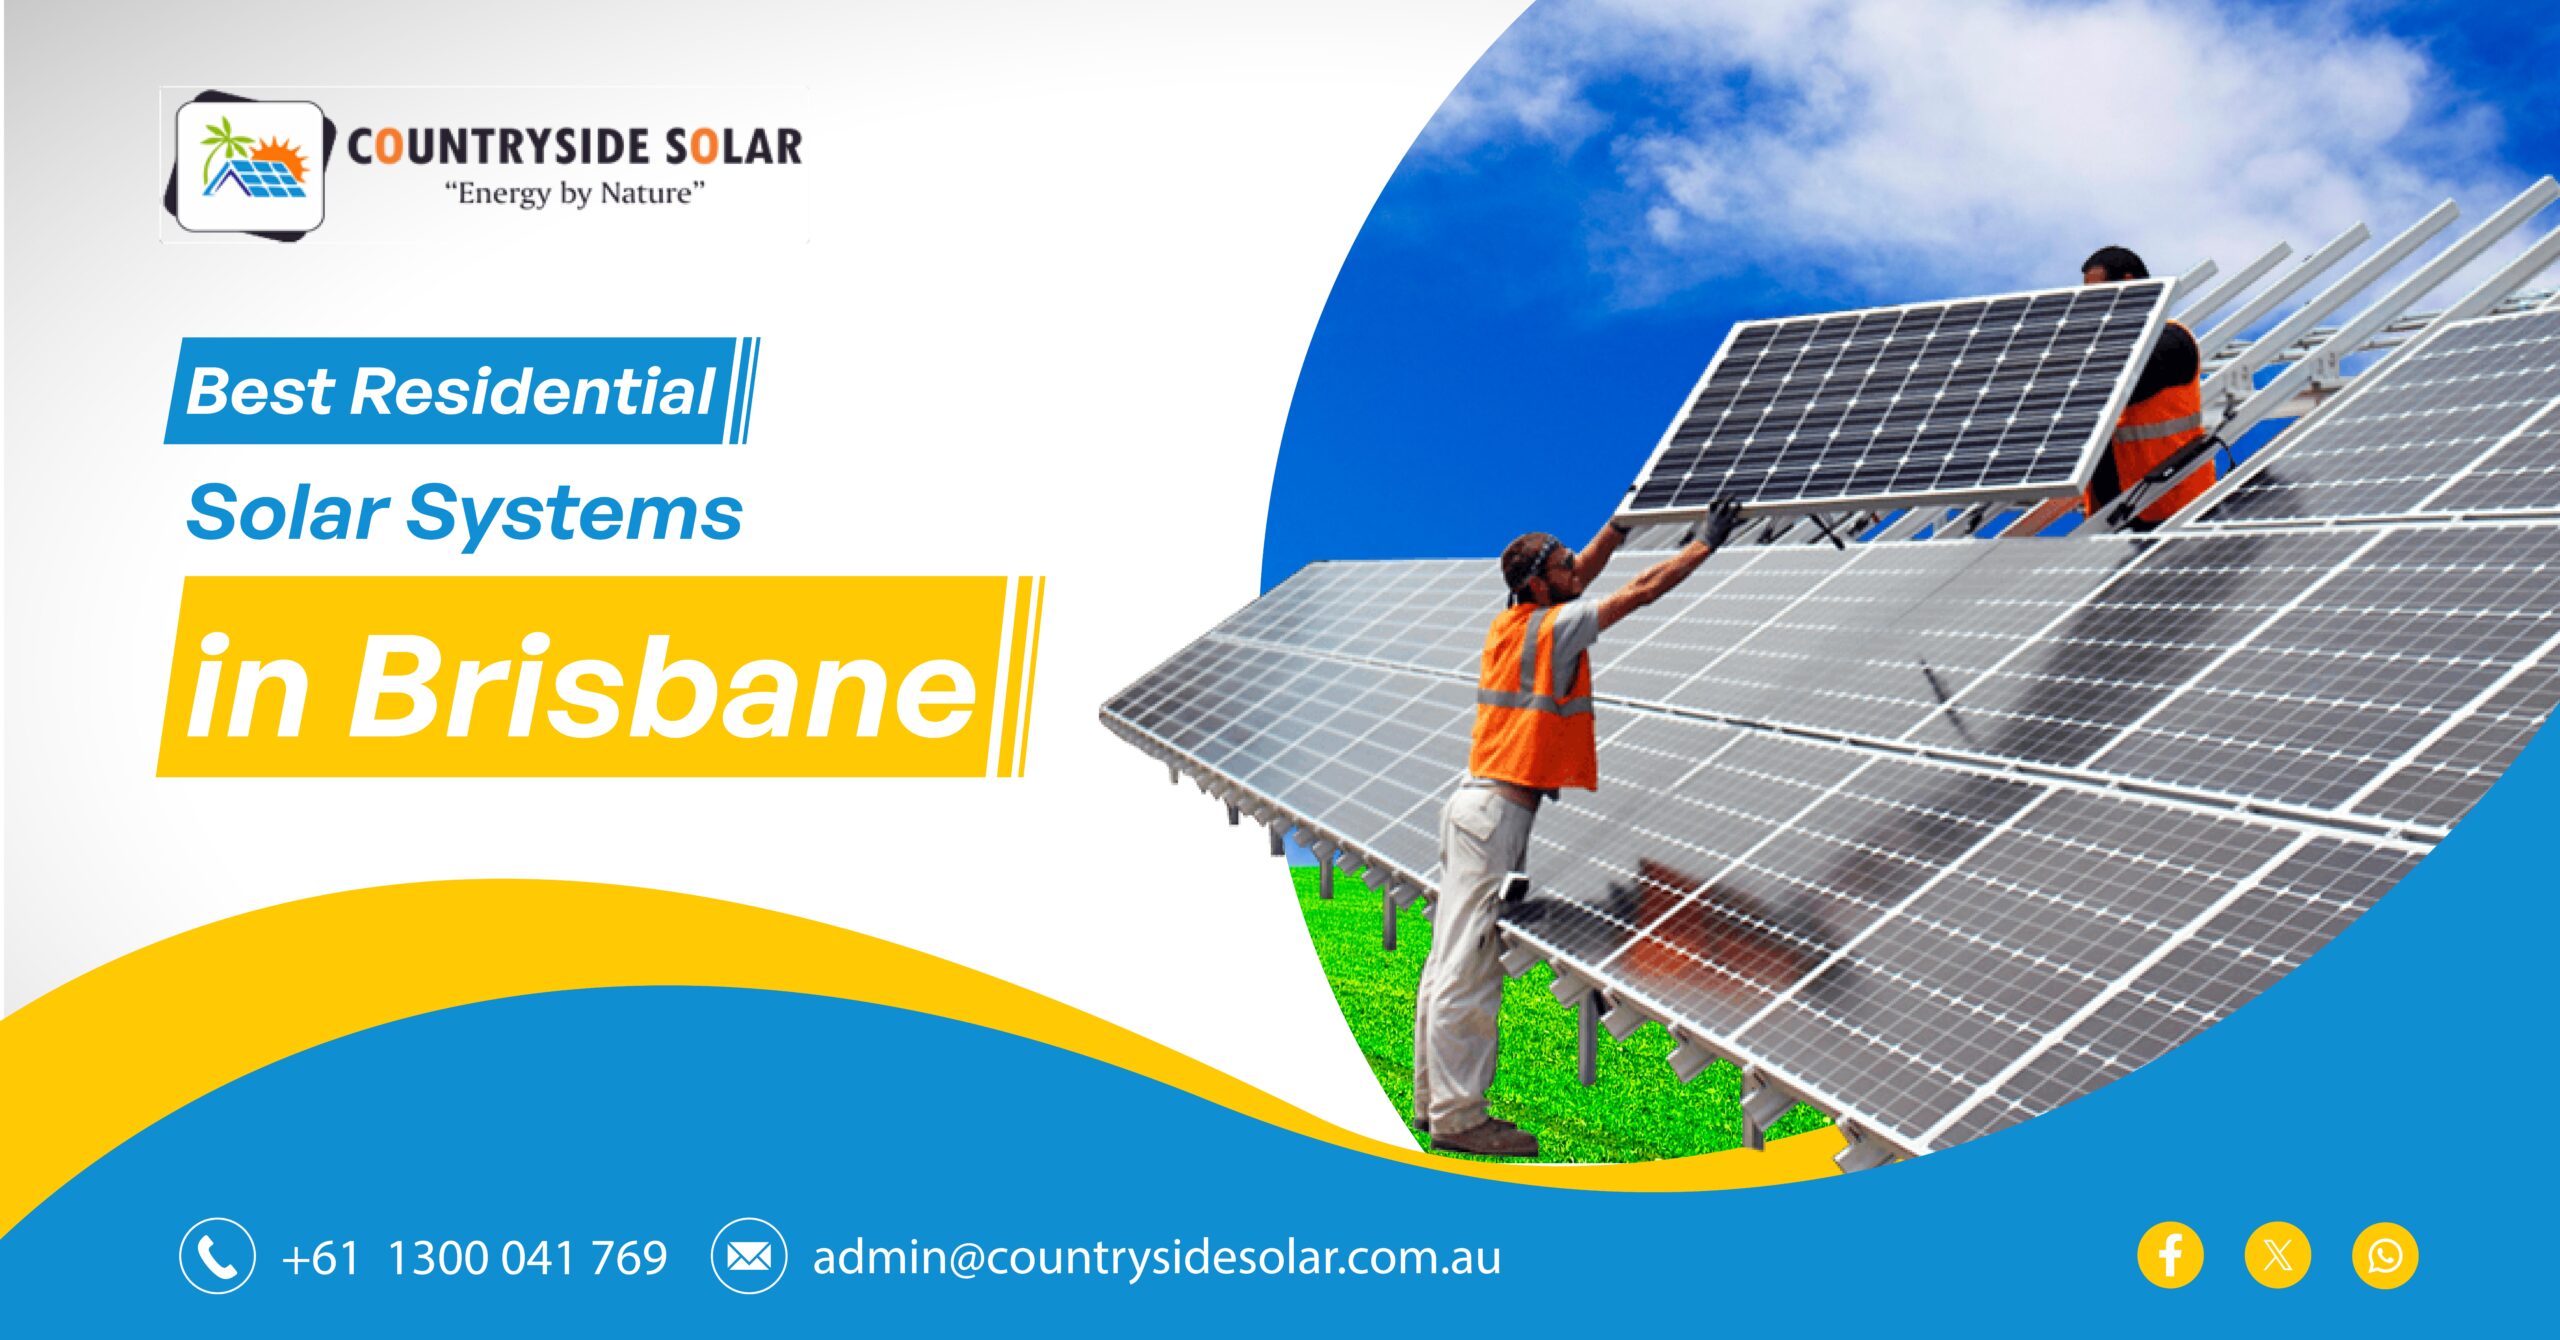 Best Residential Solar Systems in Brisbane